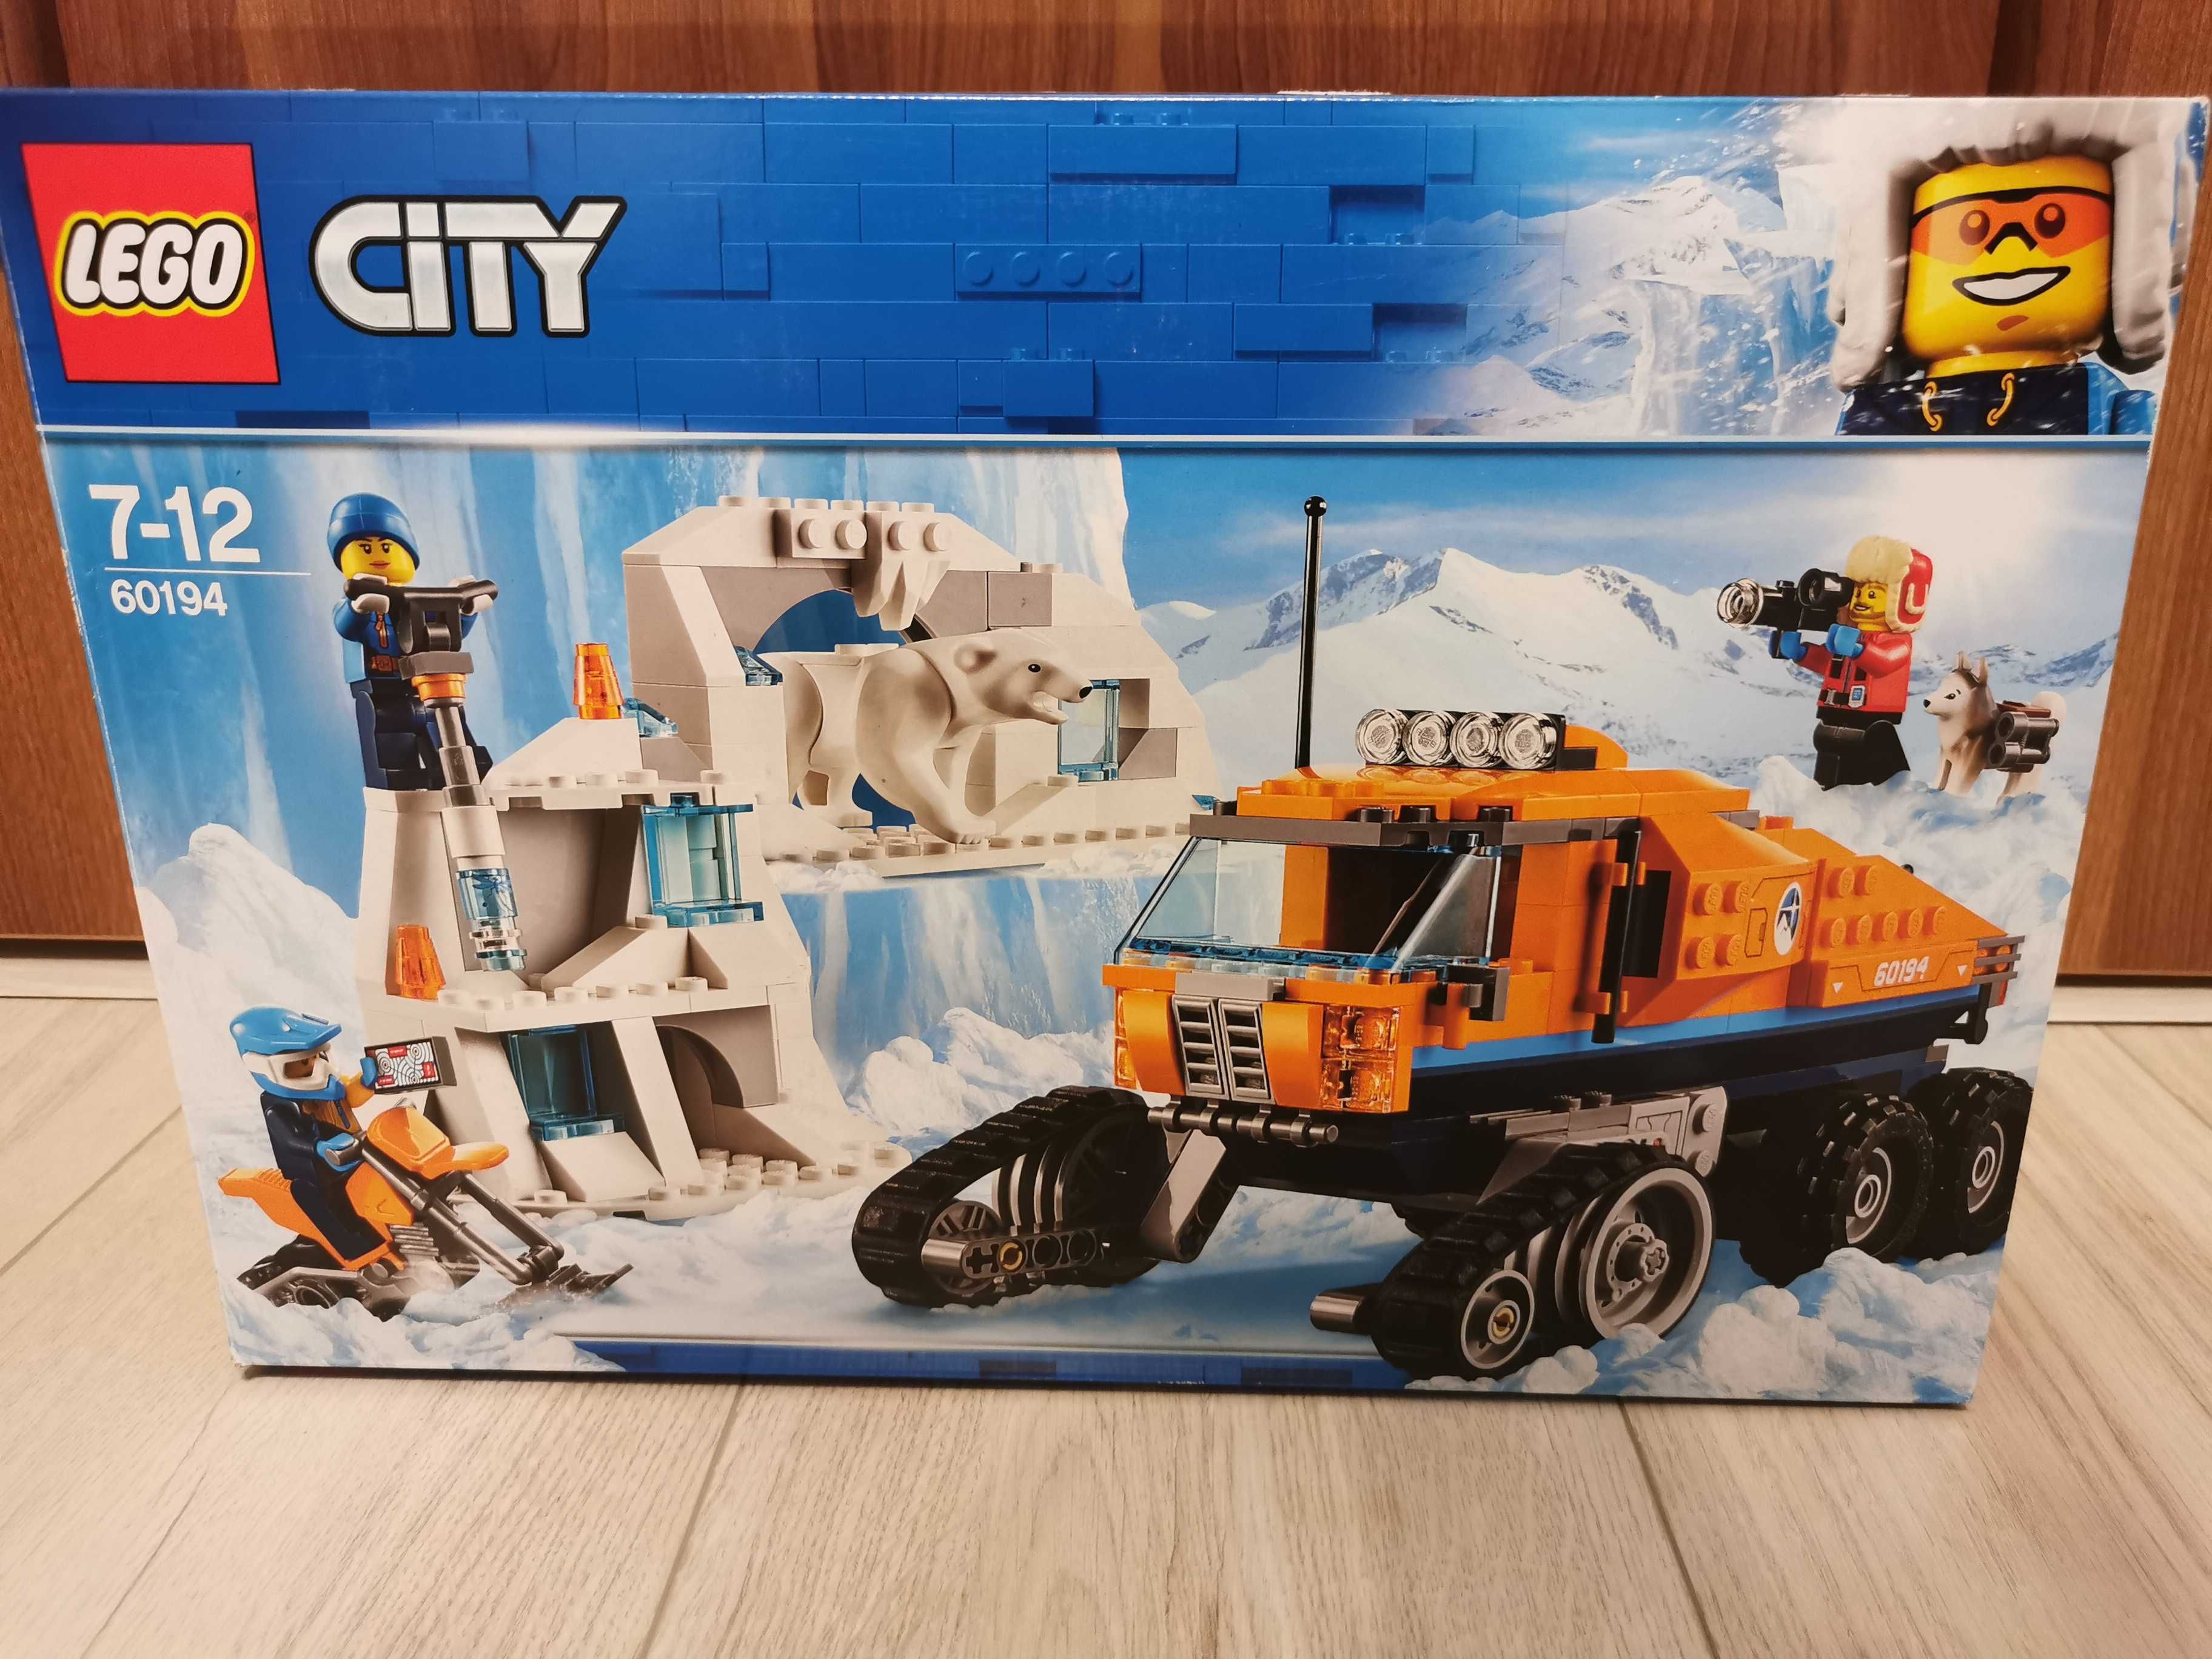 Vand Lego City 60194, in stare impecabila.